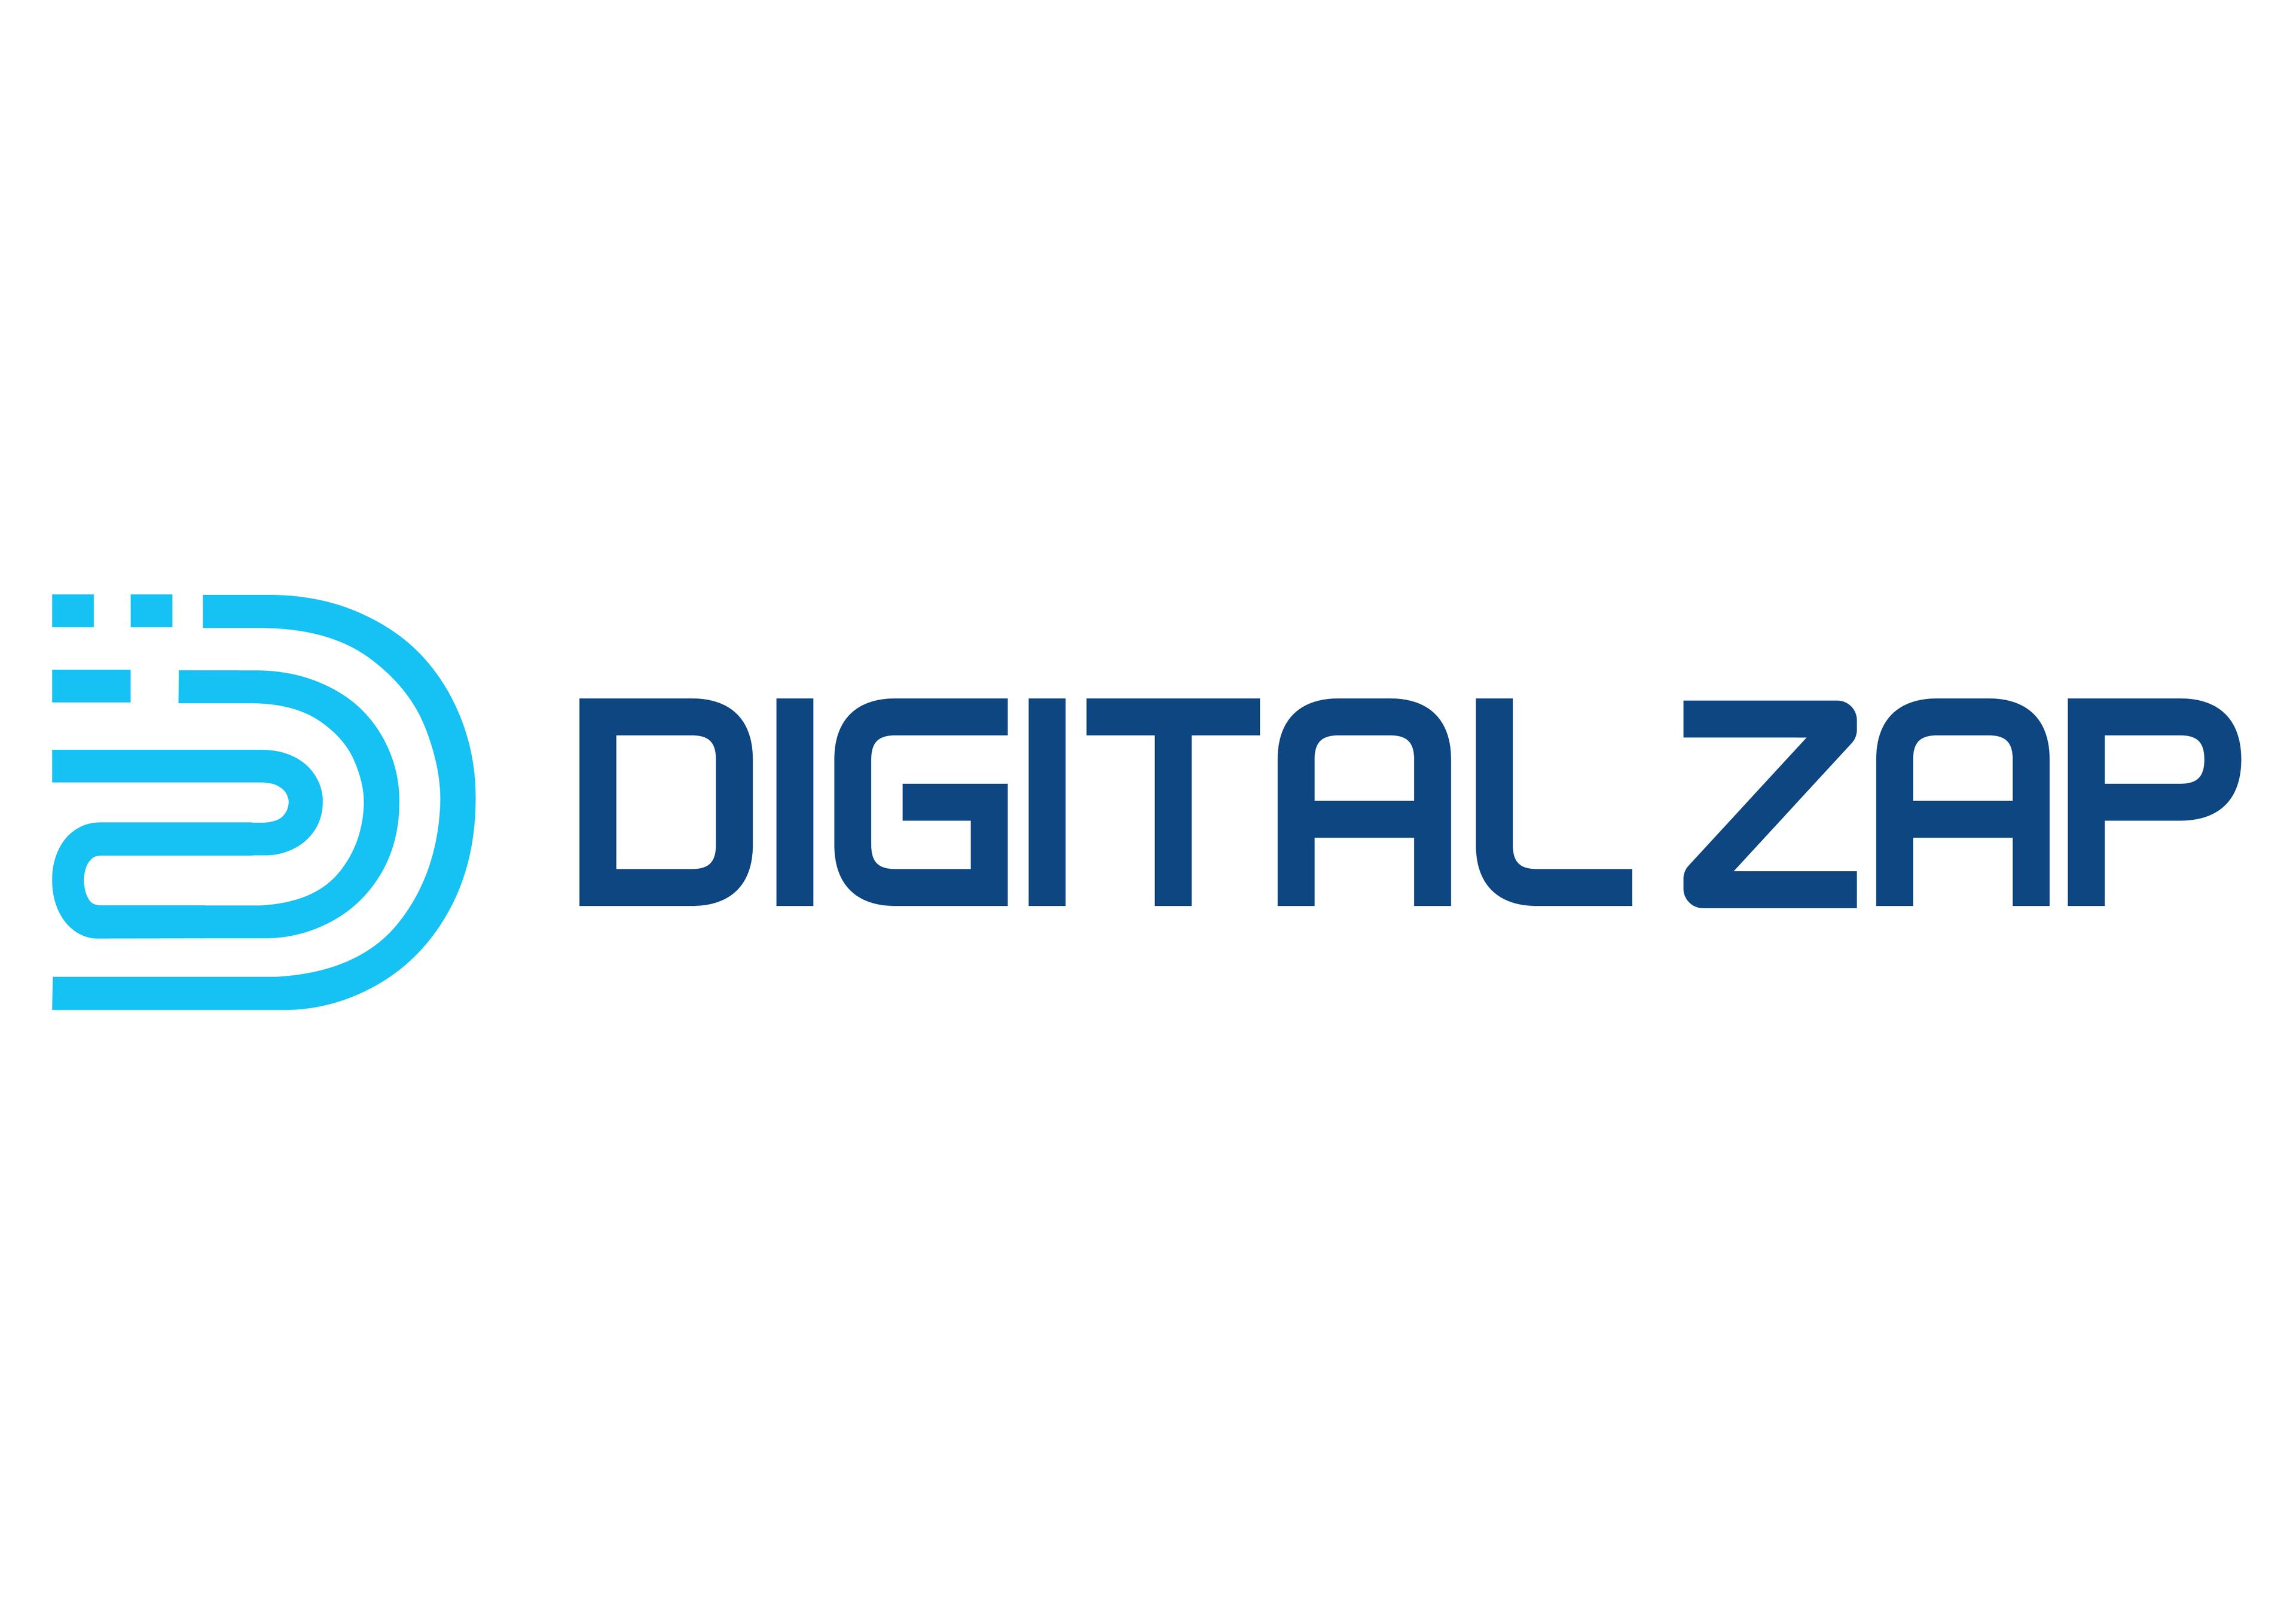 DigitalZap cover